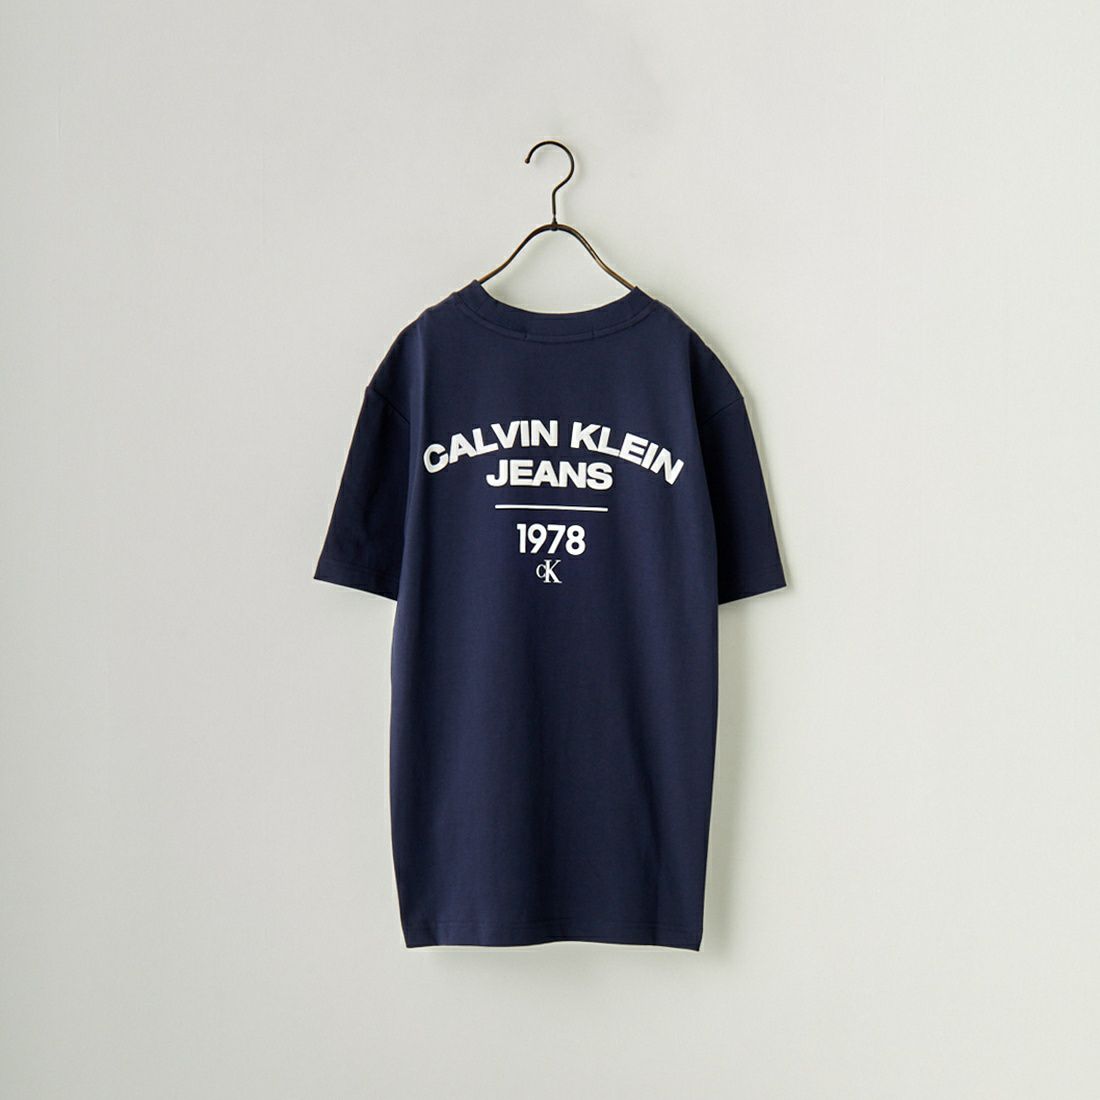 Calvin Klein Jeans [カルバンクライン ジーンズ] バックカーブロゴT